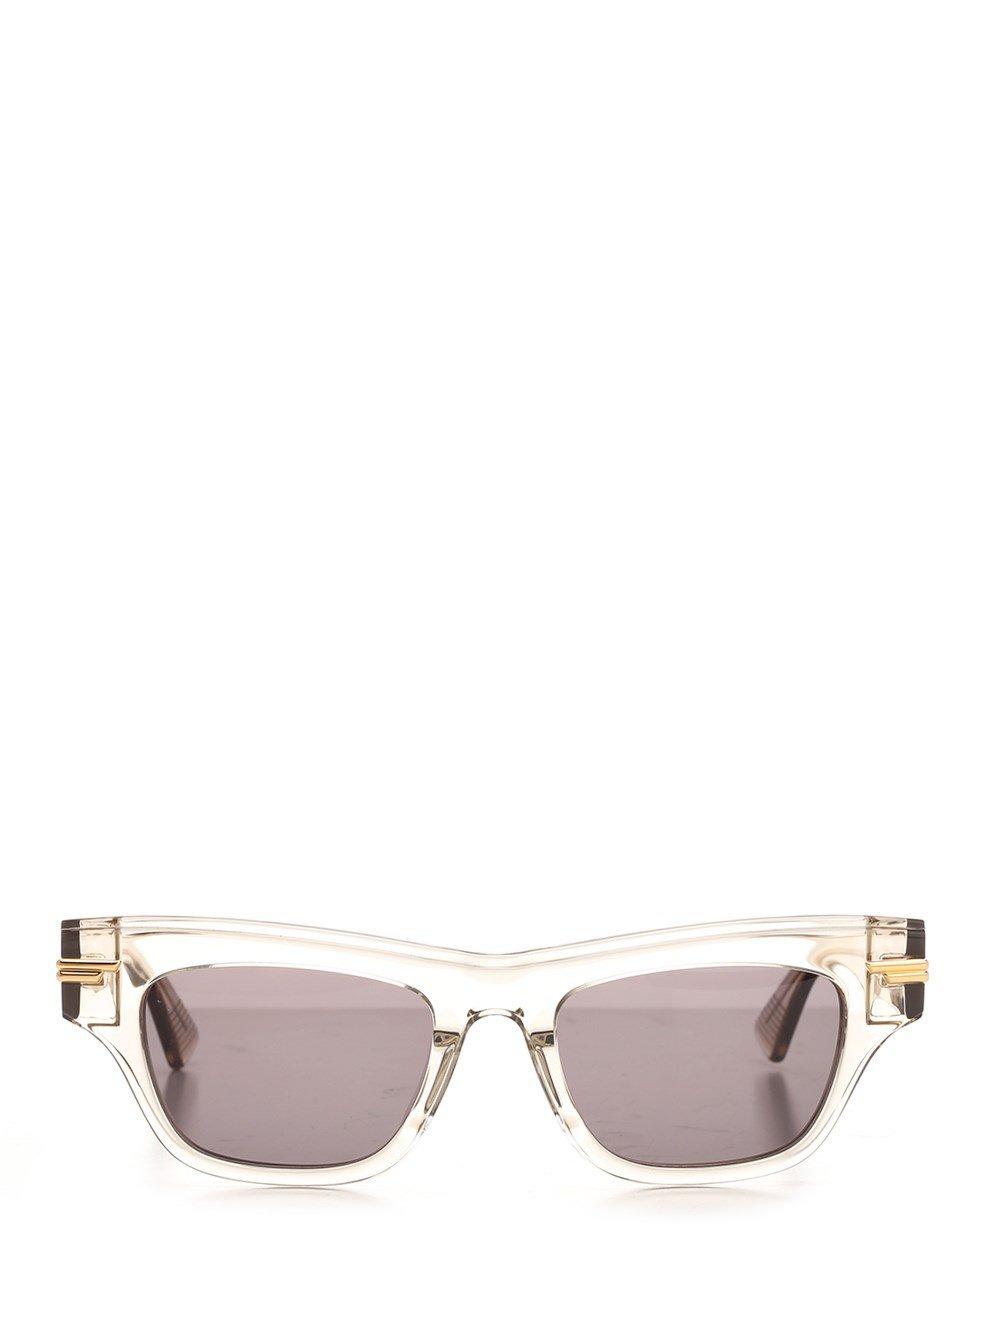 Bottega Veneta Eyewear Square-Frame Sunglasses